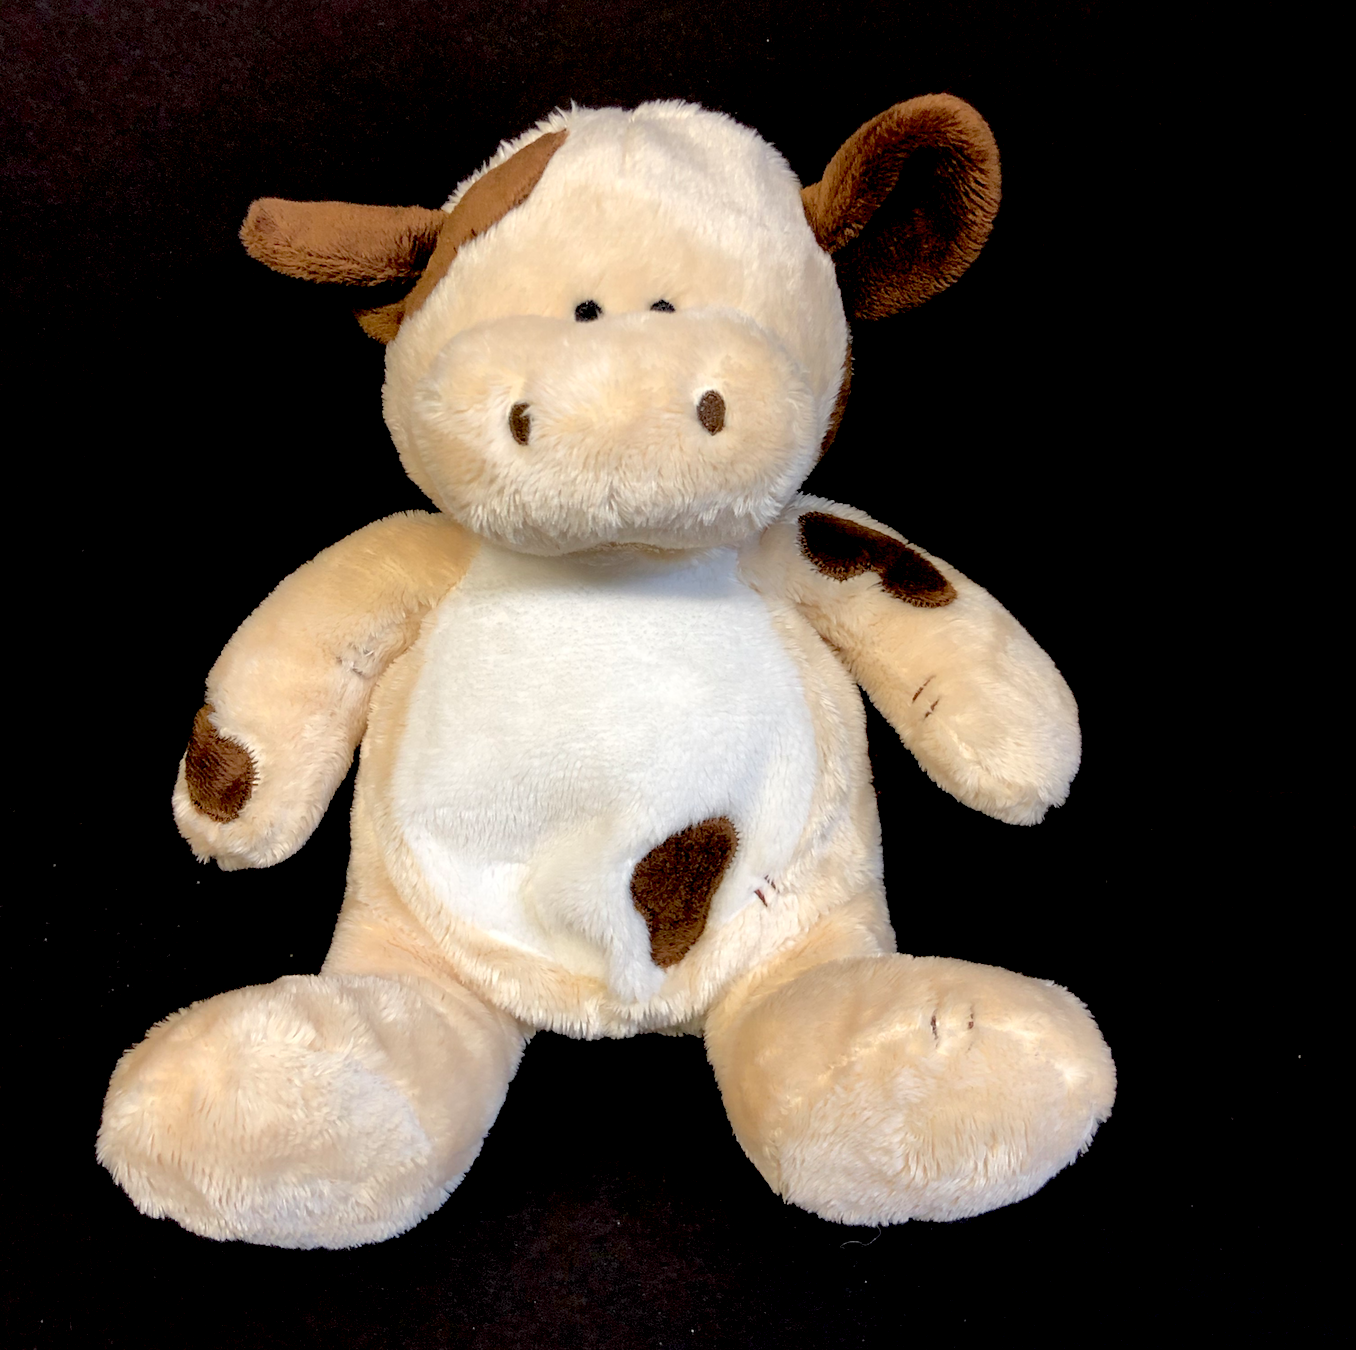 Boyds Bears Plush Baby Boyds Brown Cow Plush Stuffed Animal Baby Rattle - $24.99